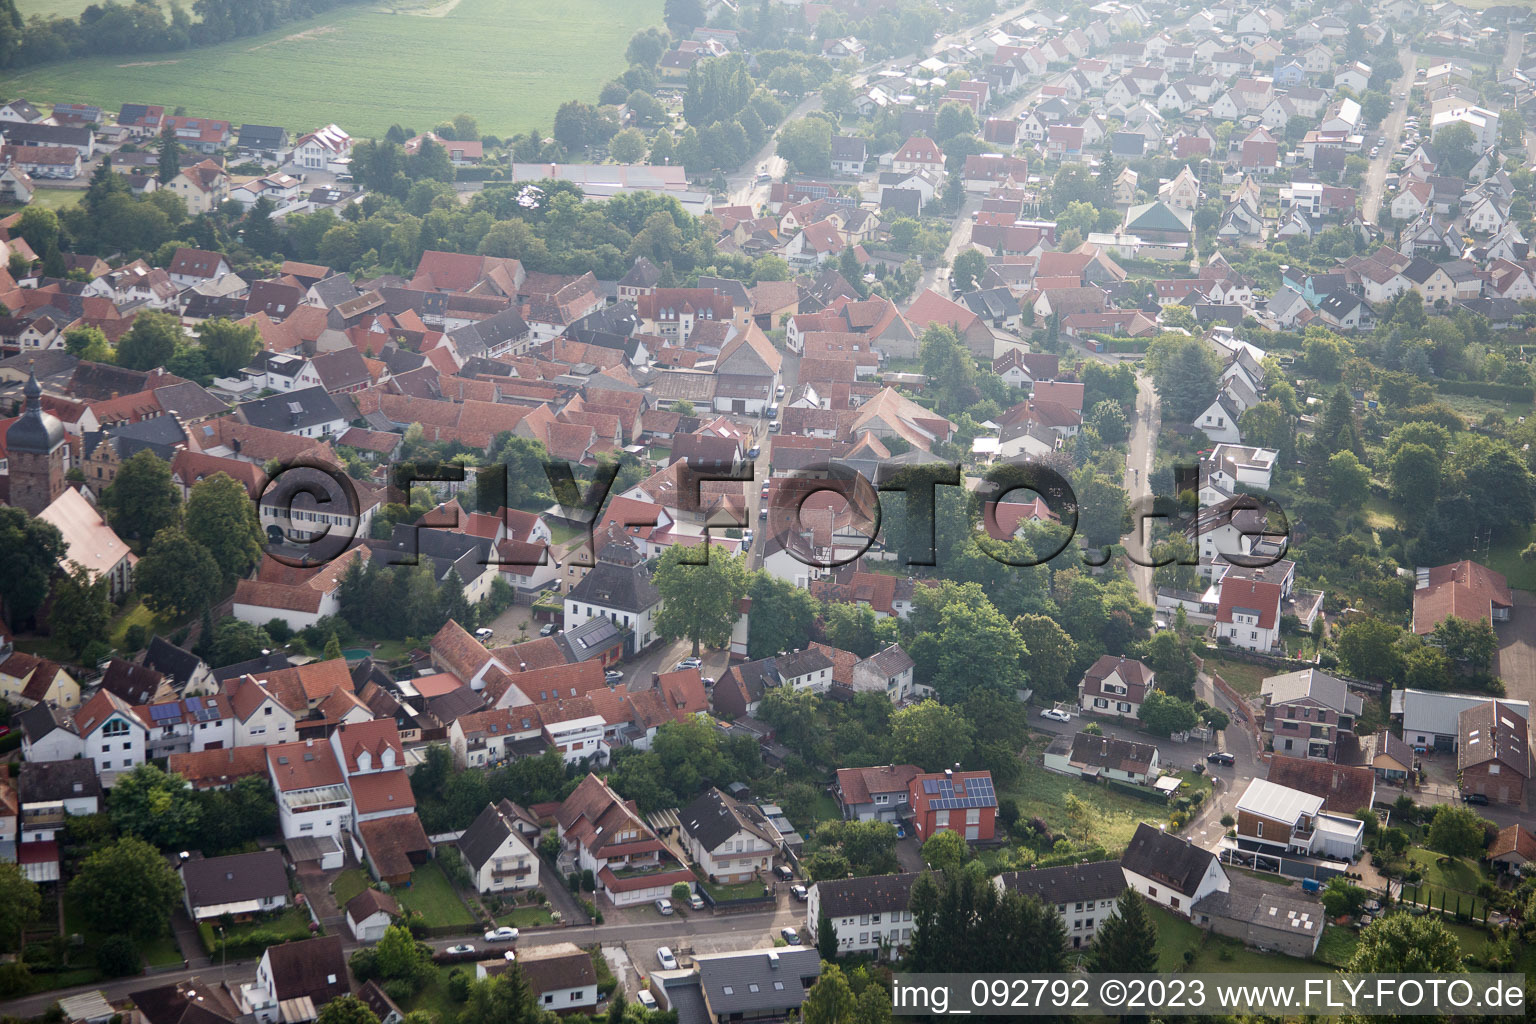 Drone recording of District Billigheim in Billigheim-Ingenheim in the state Rhineland-Palatinate, Germany